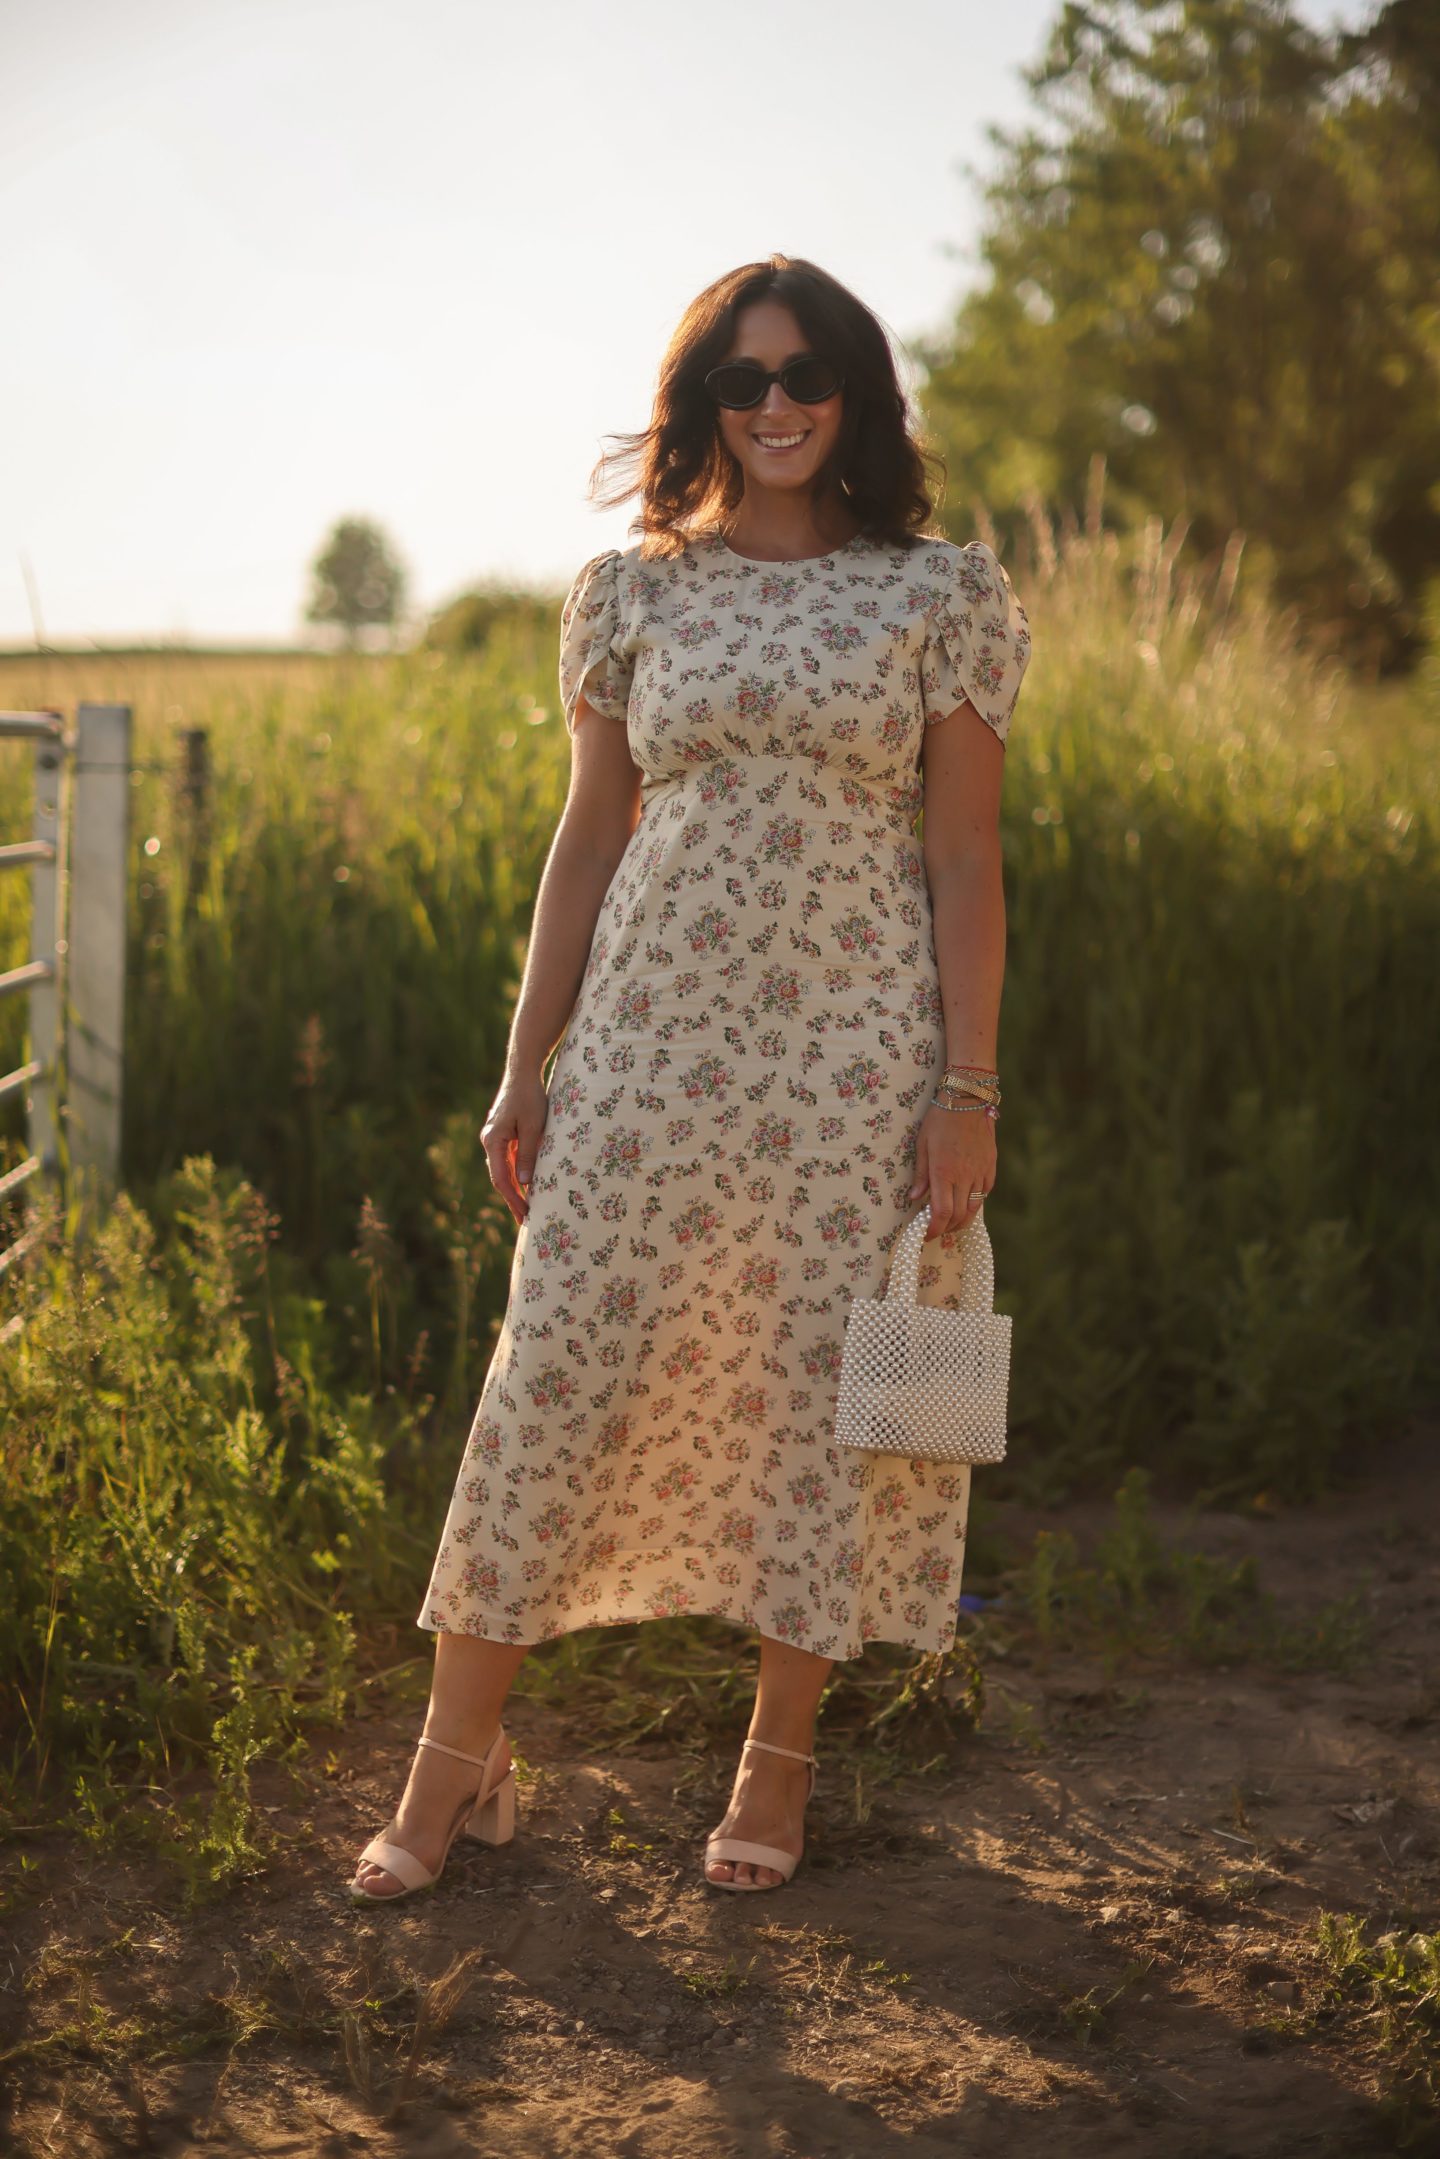 Christina stands beside a field of long grass wearing a summer dress and sunglasses as the sun sets.